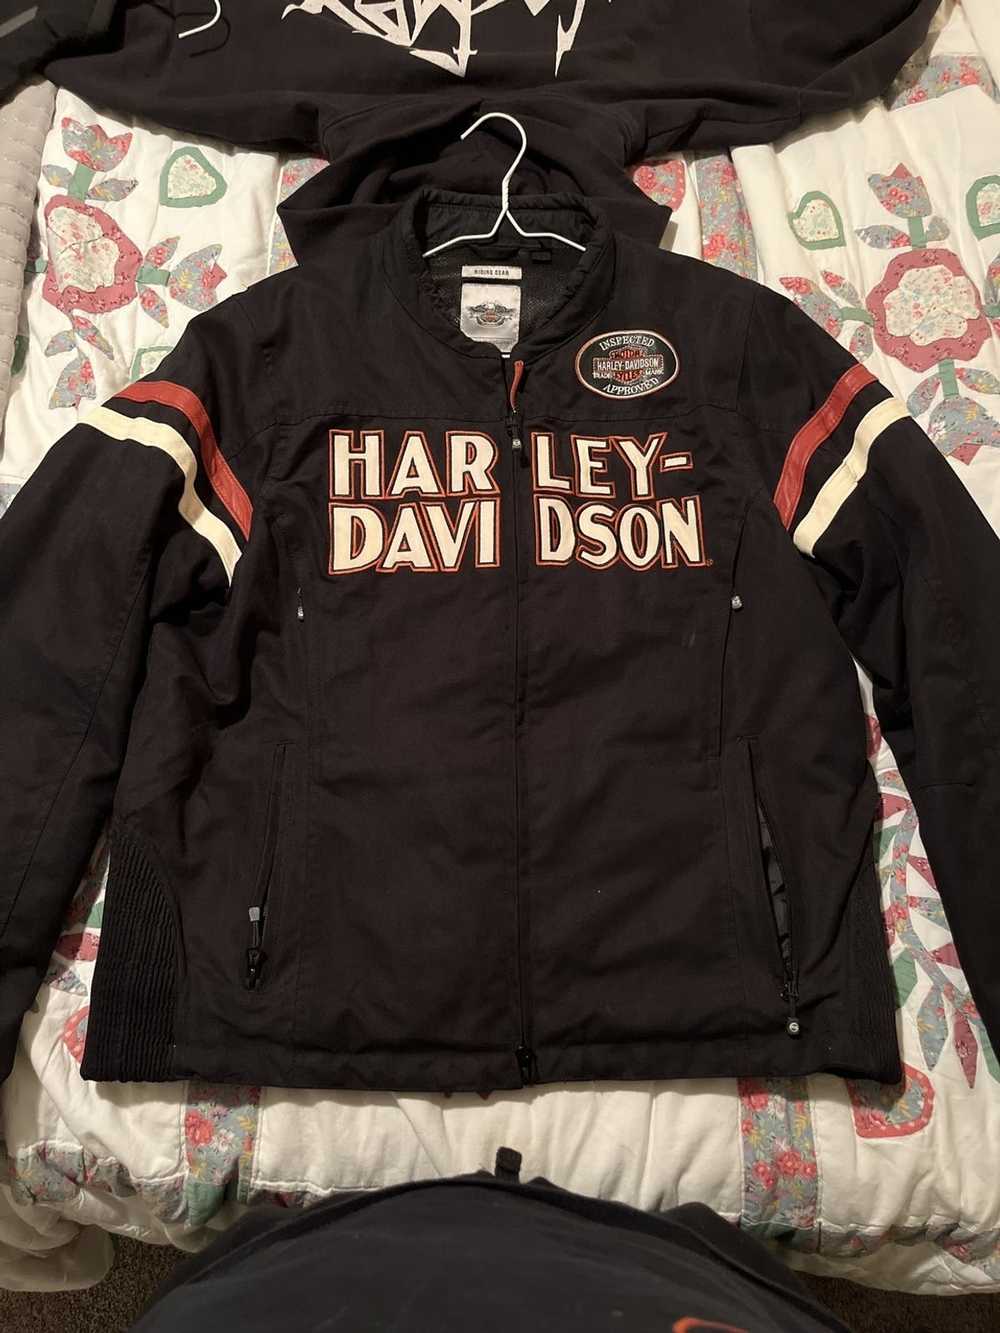 Harley Davidson Riding jacket - image 1